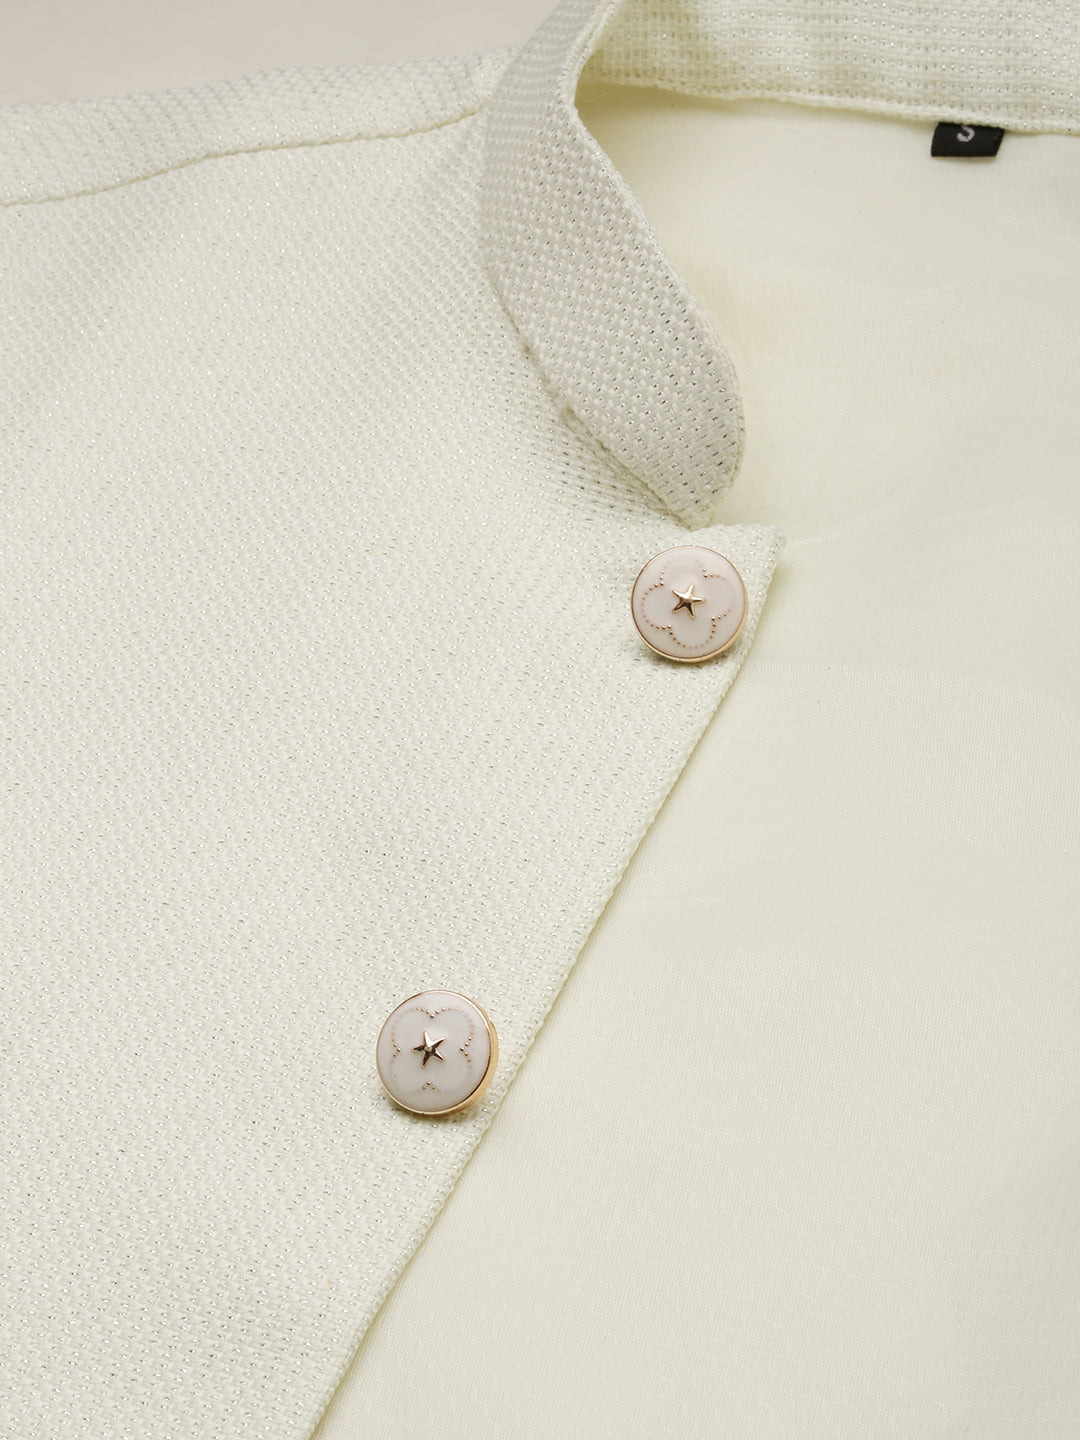 Men Mandarin Collar Woven Design Cream Nehru Jacket